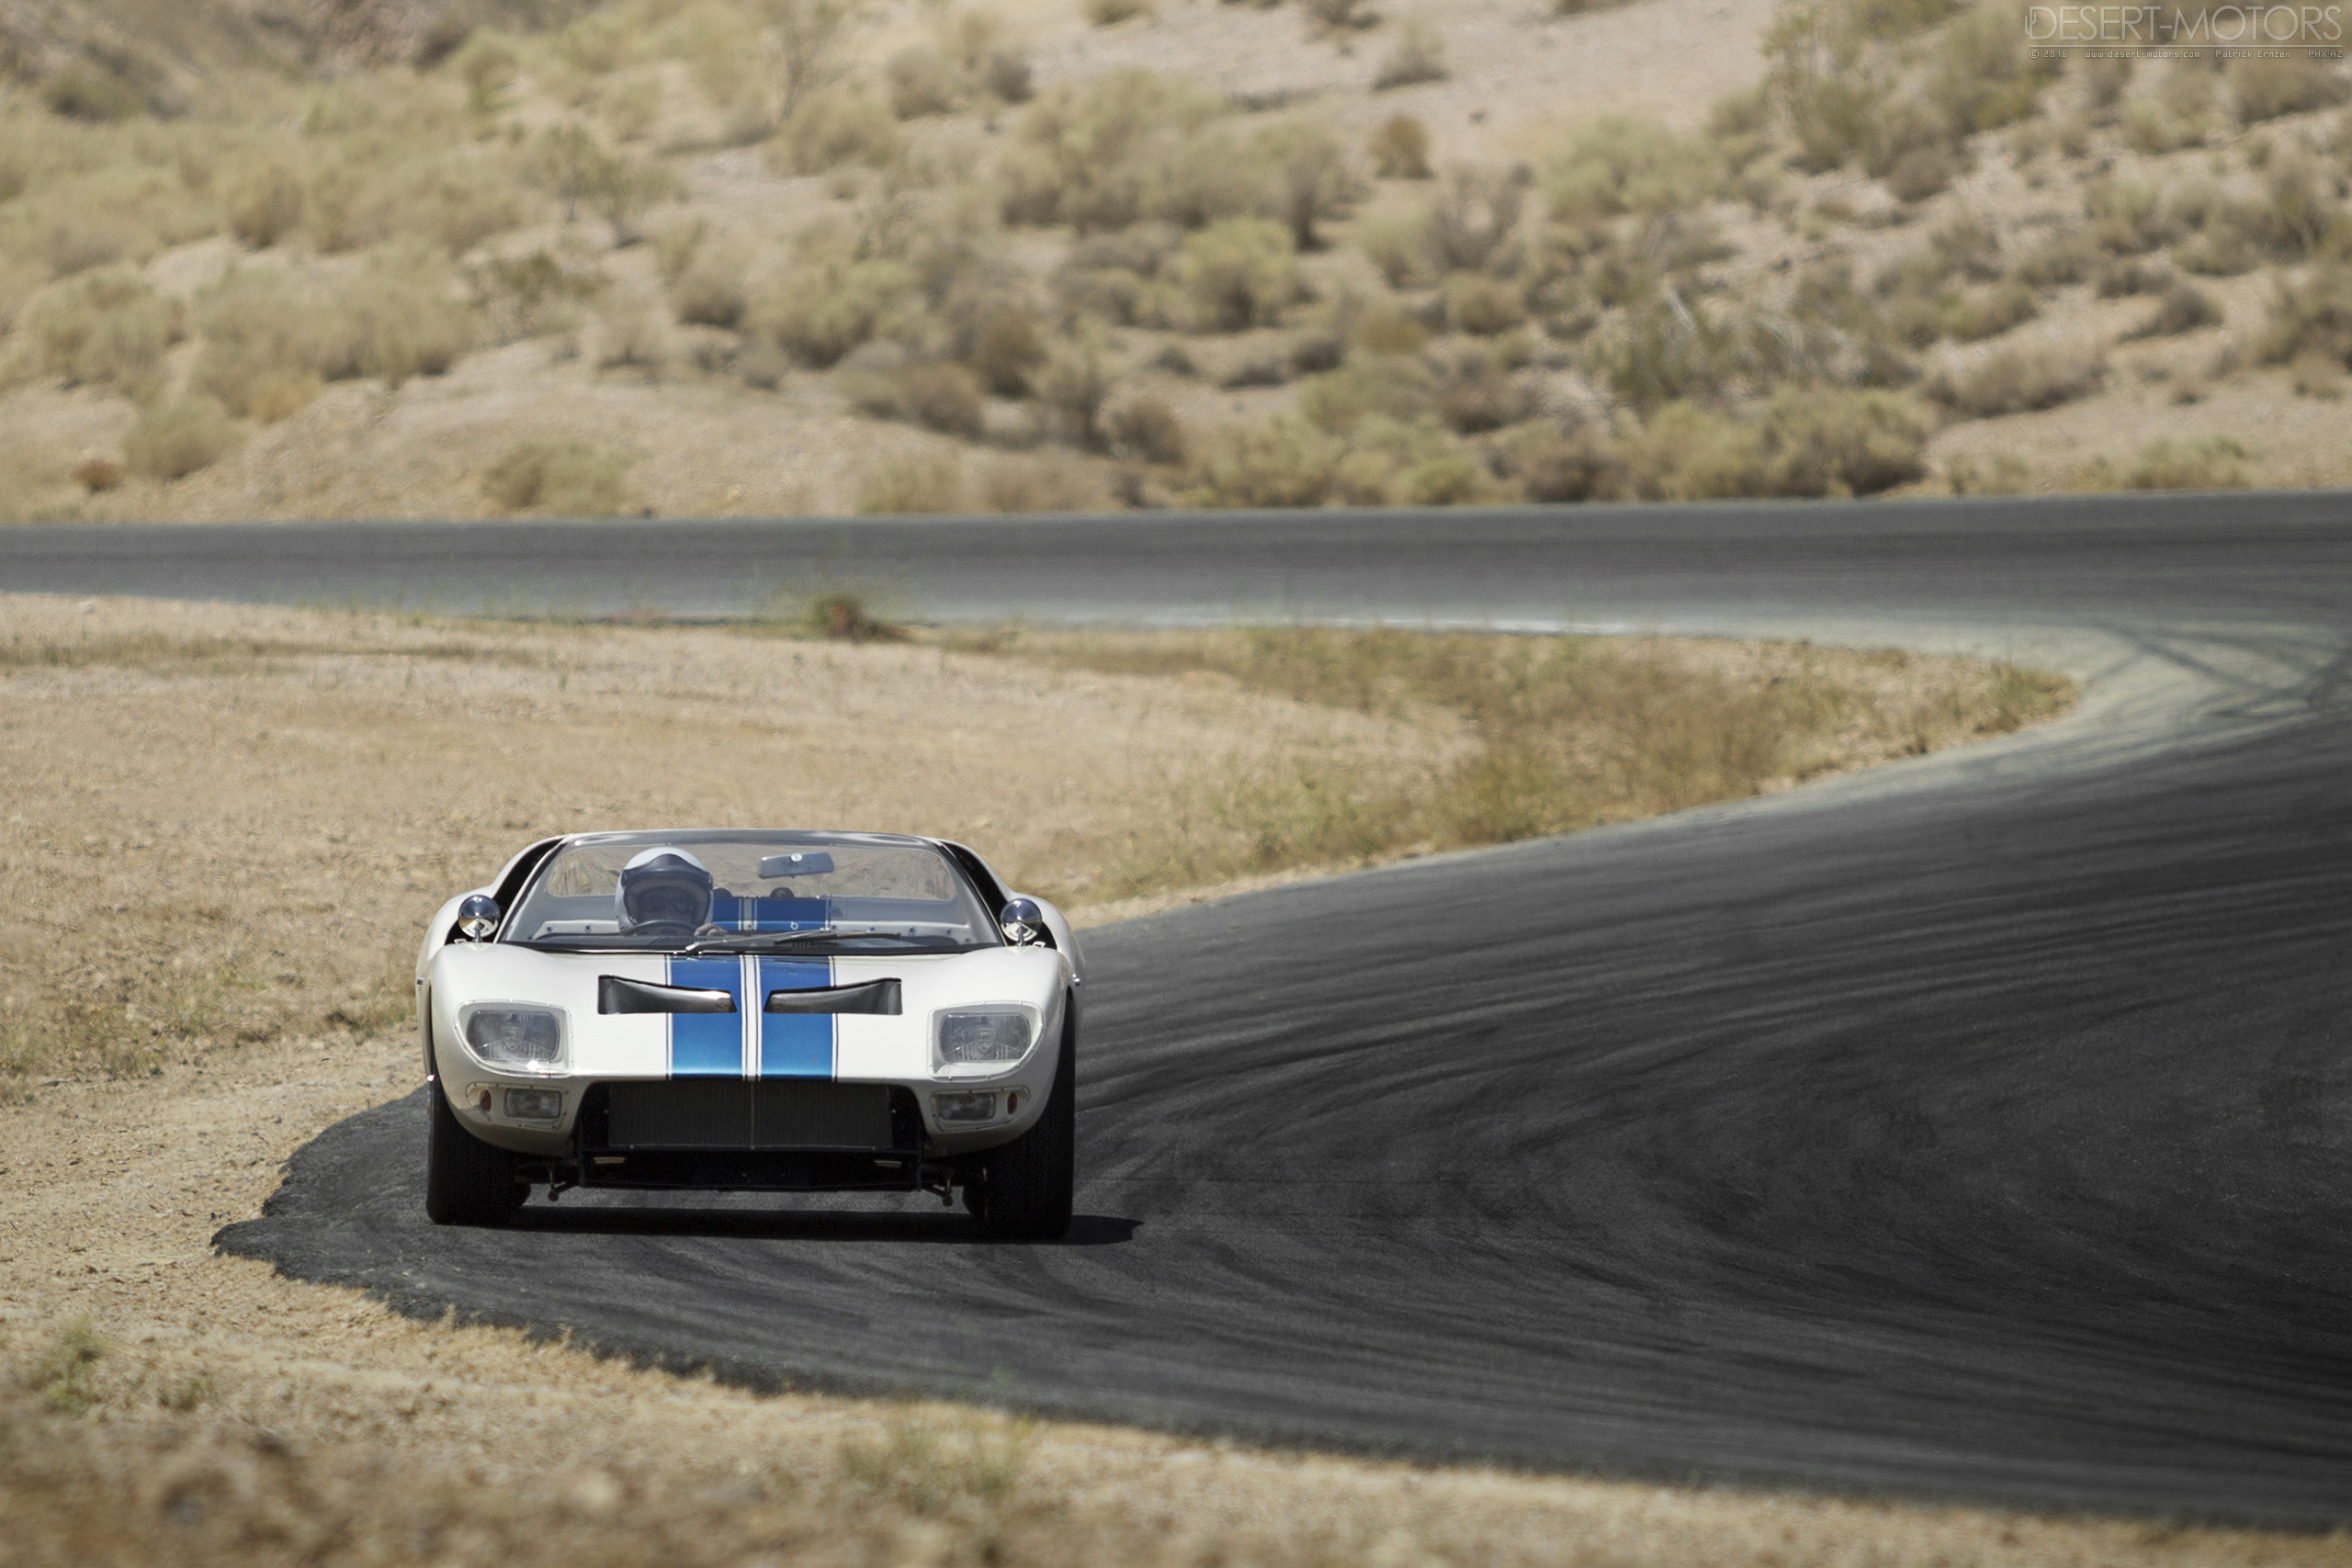 Ford GT40 Prototypes White Cars Race Cars Classic Car Racing Stripes Raceway Race Tracks Desert 2560x1707